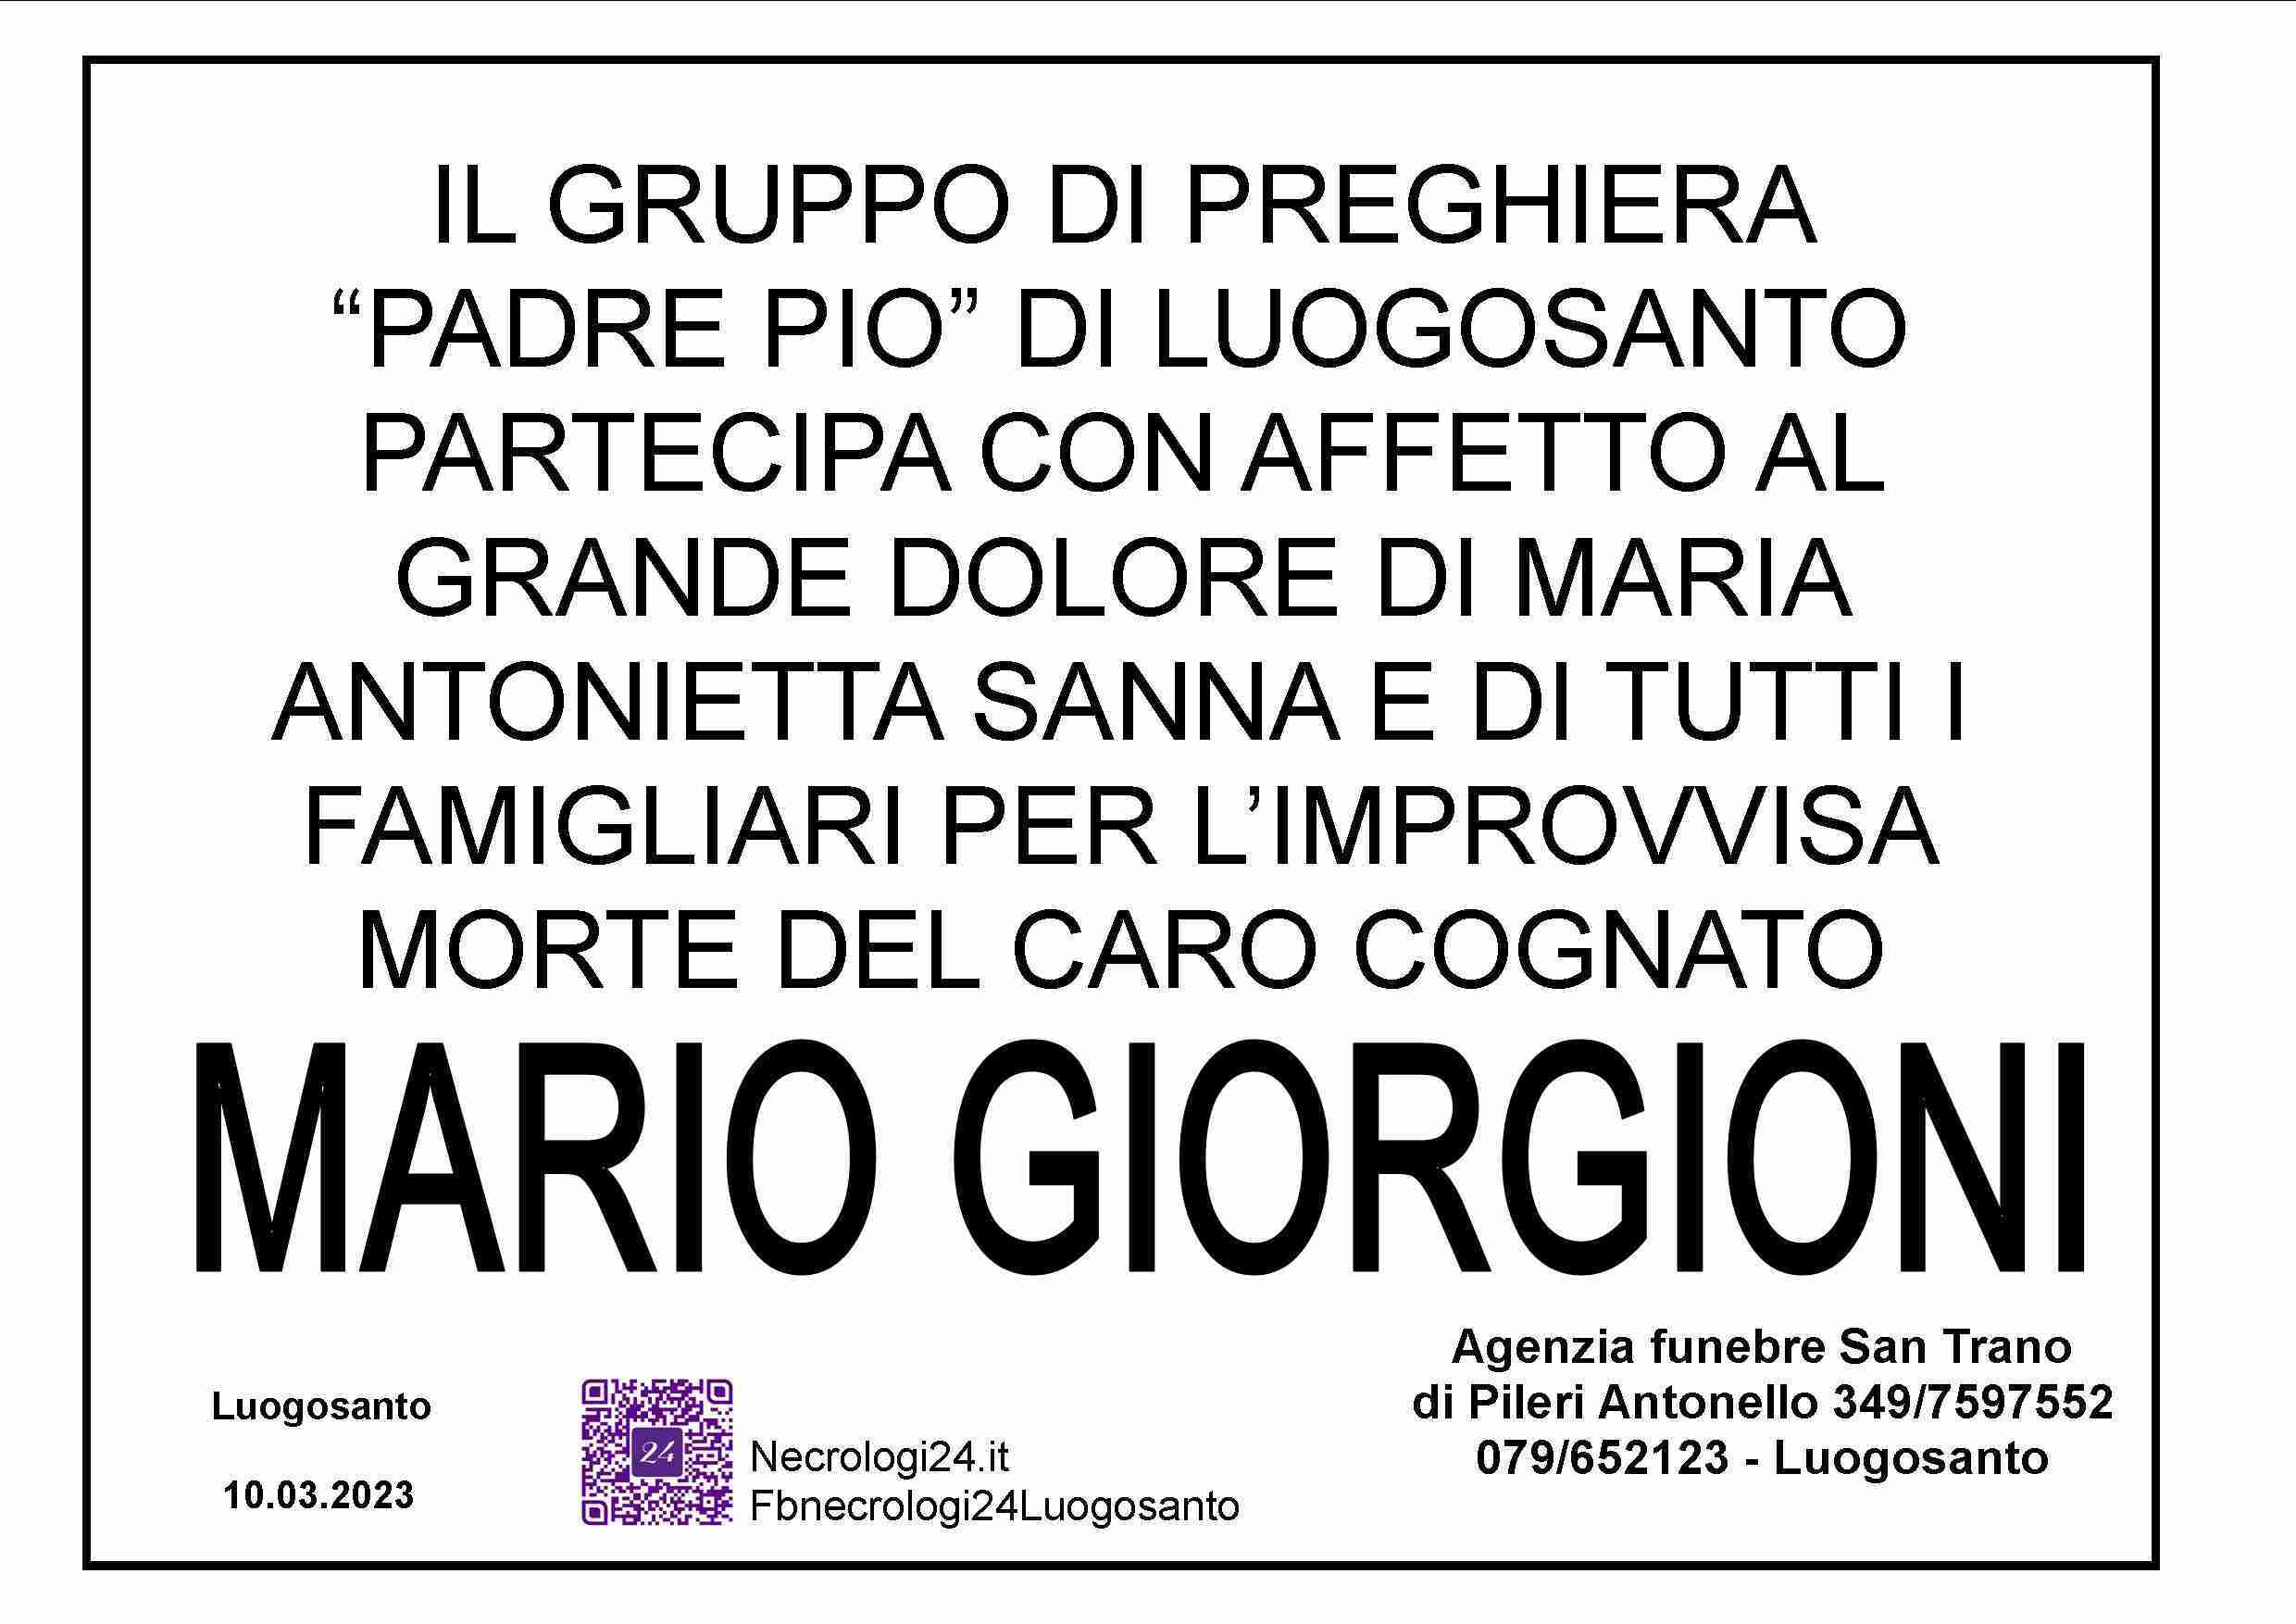 Giovanni Maria Giorgioni